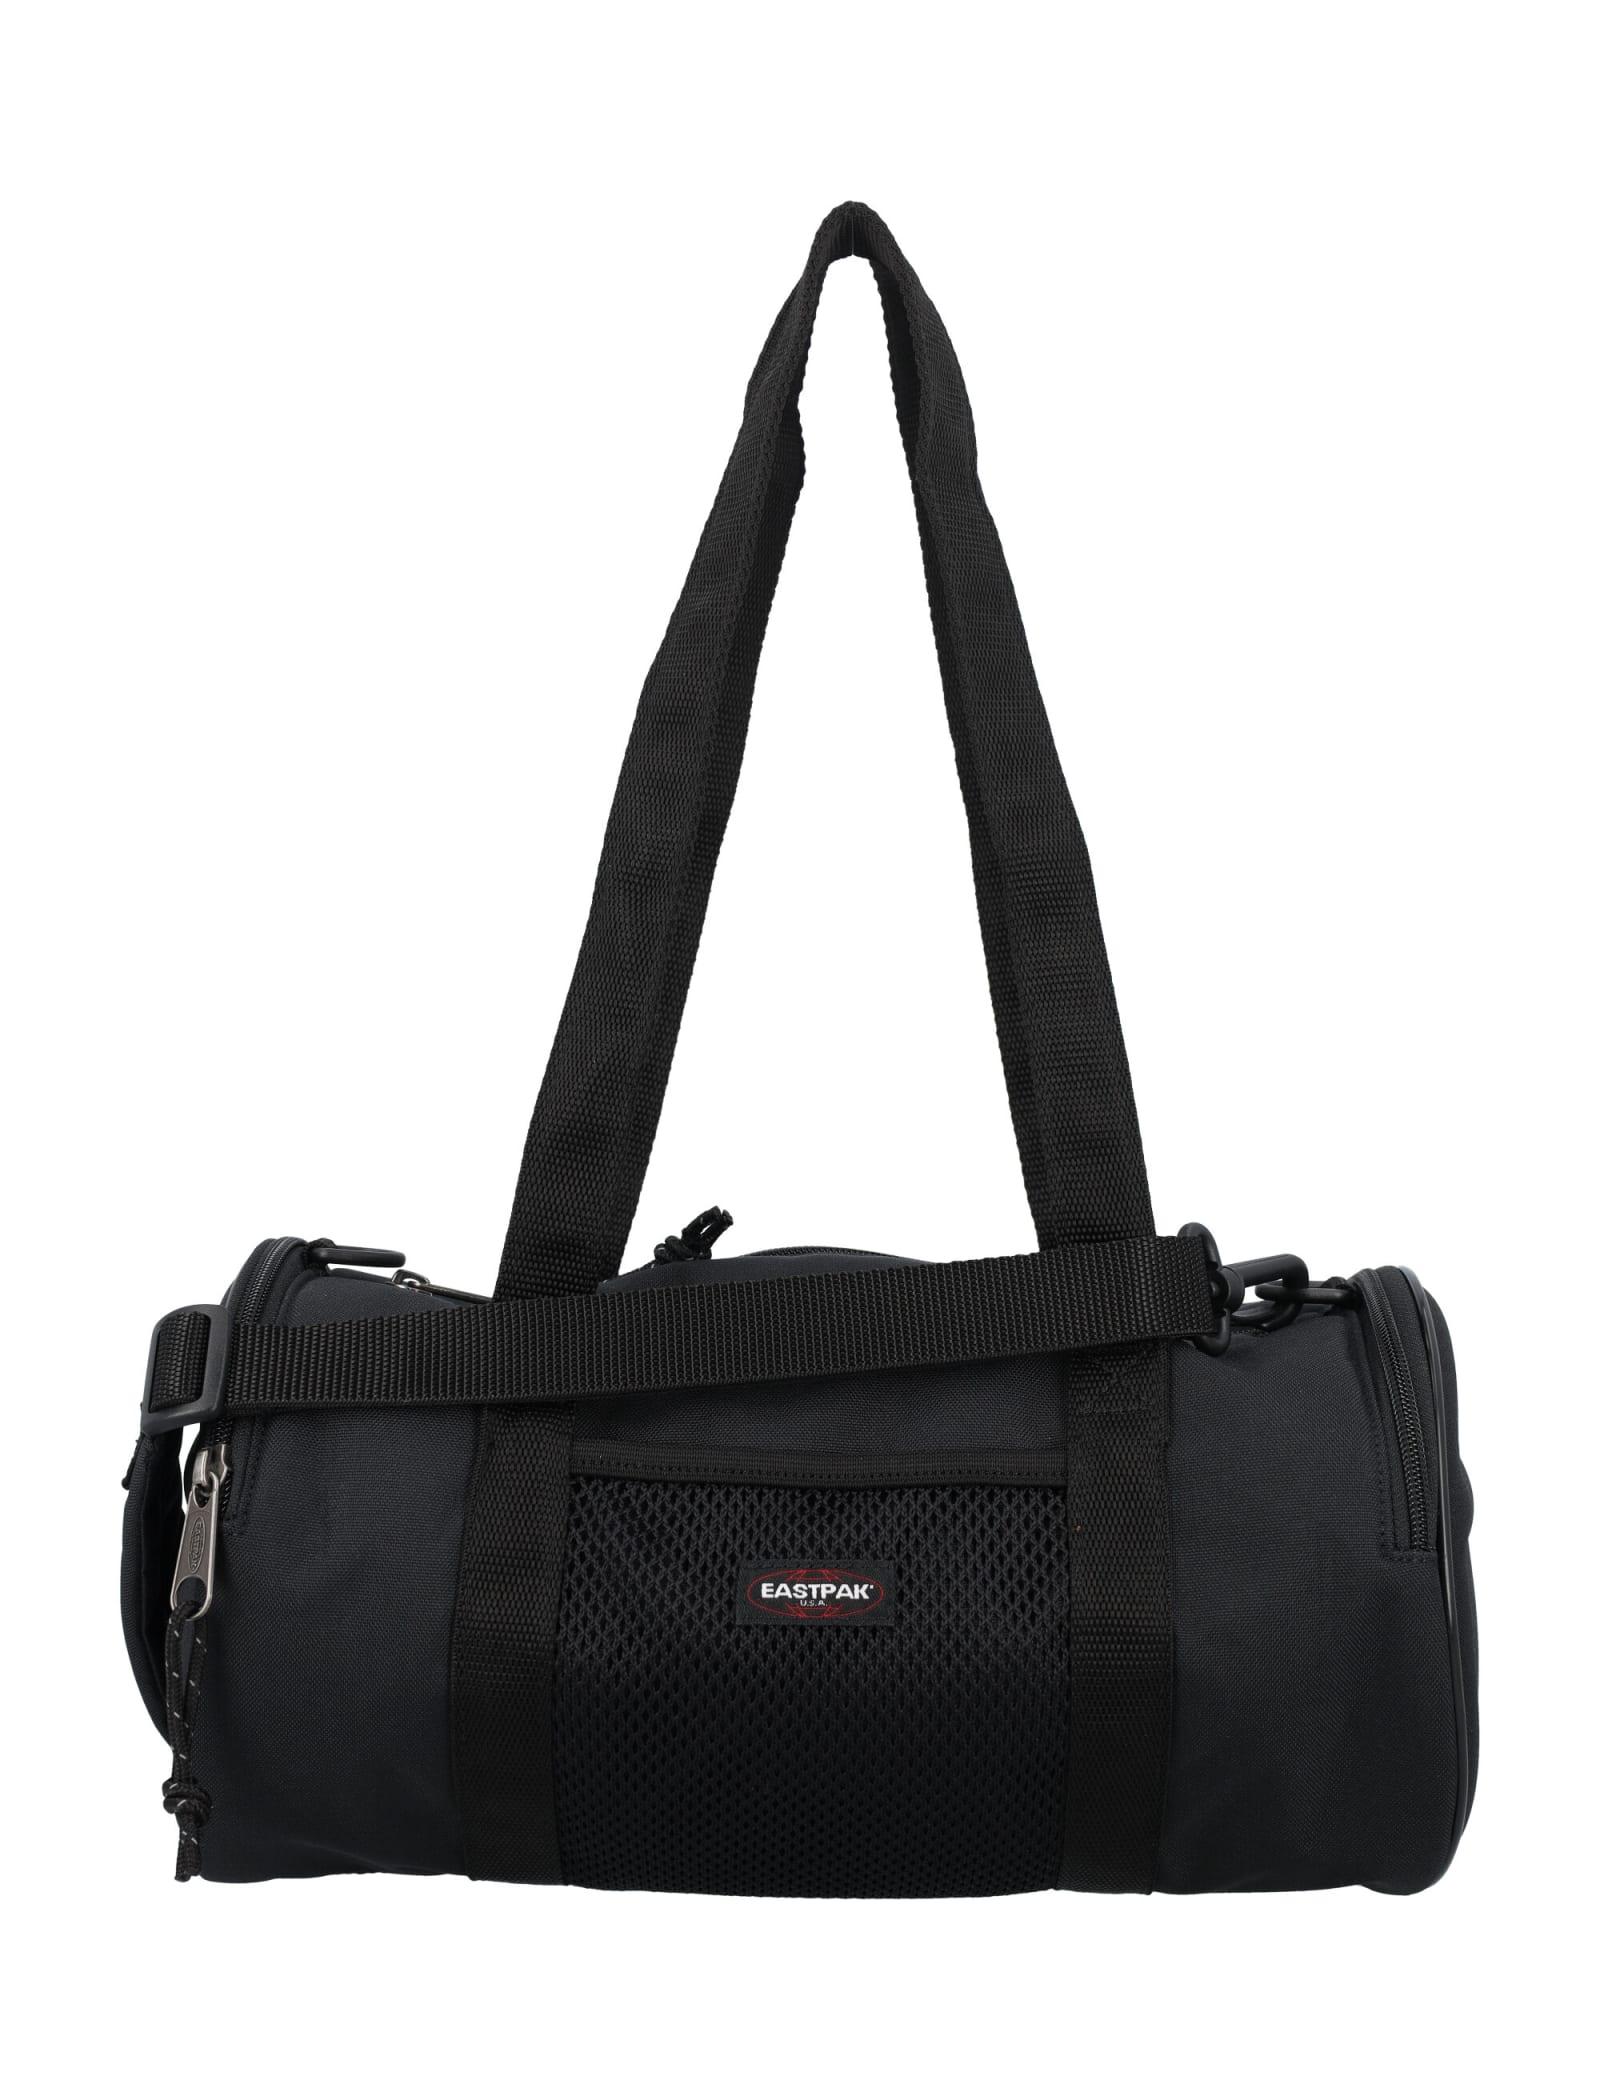 Telfar Duffel Medium Bag in Black | Lyst